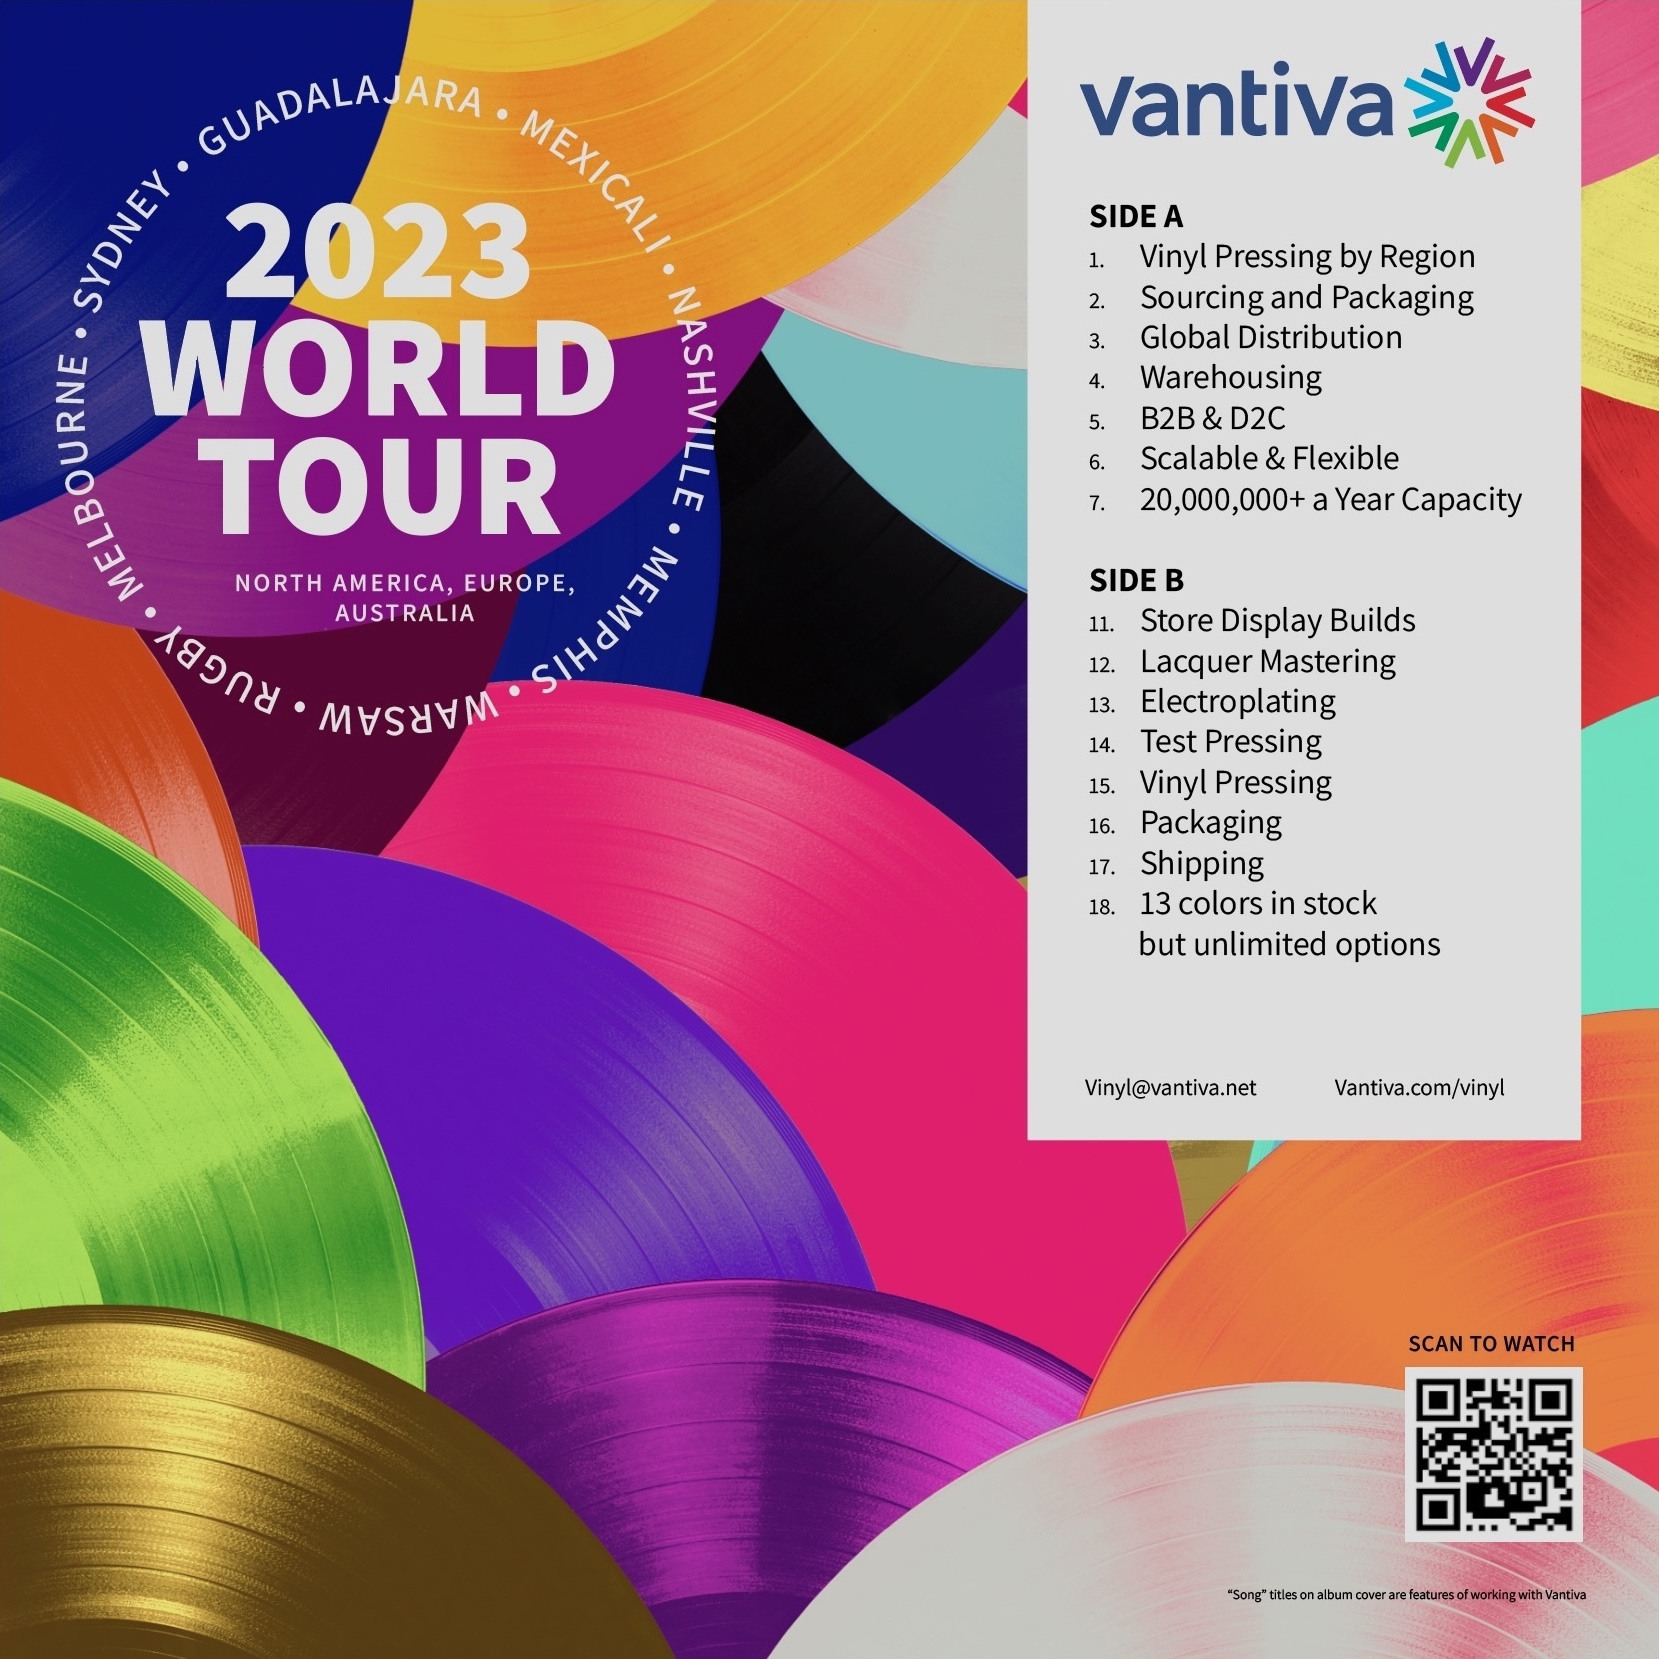 Vantiva vinyl artwork and packaging